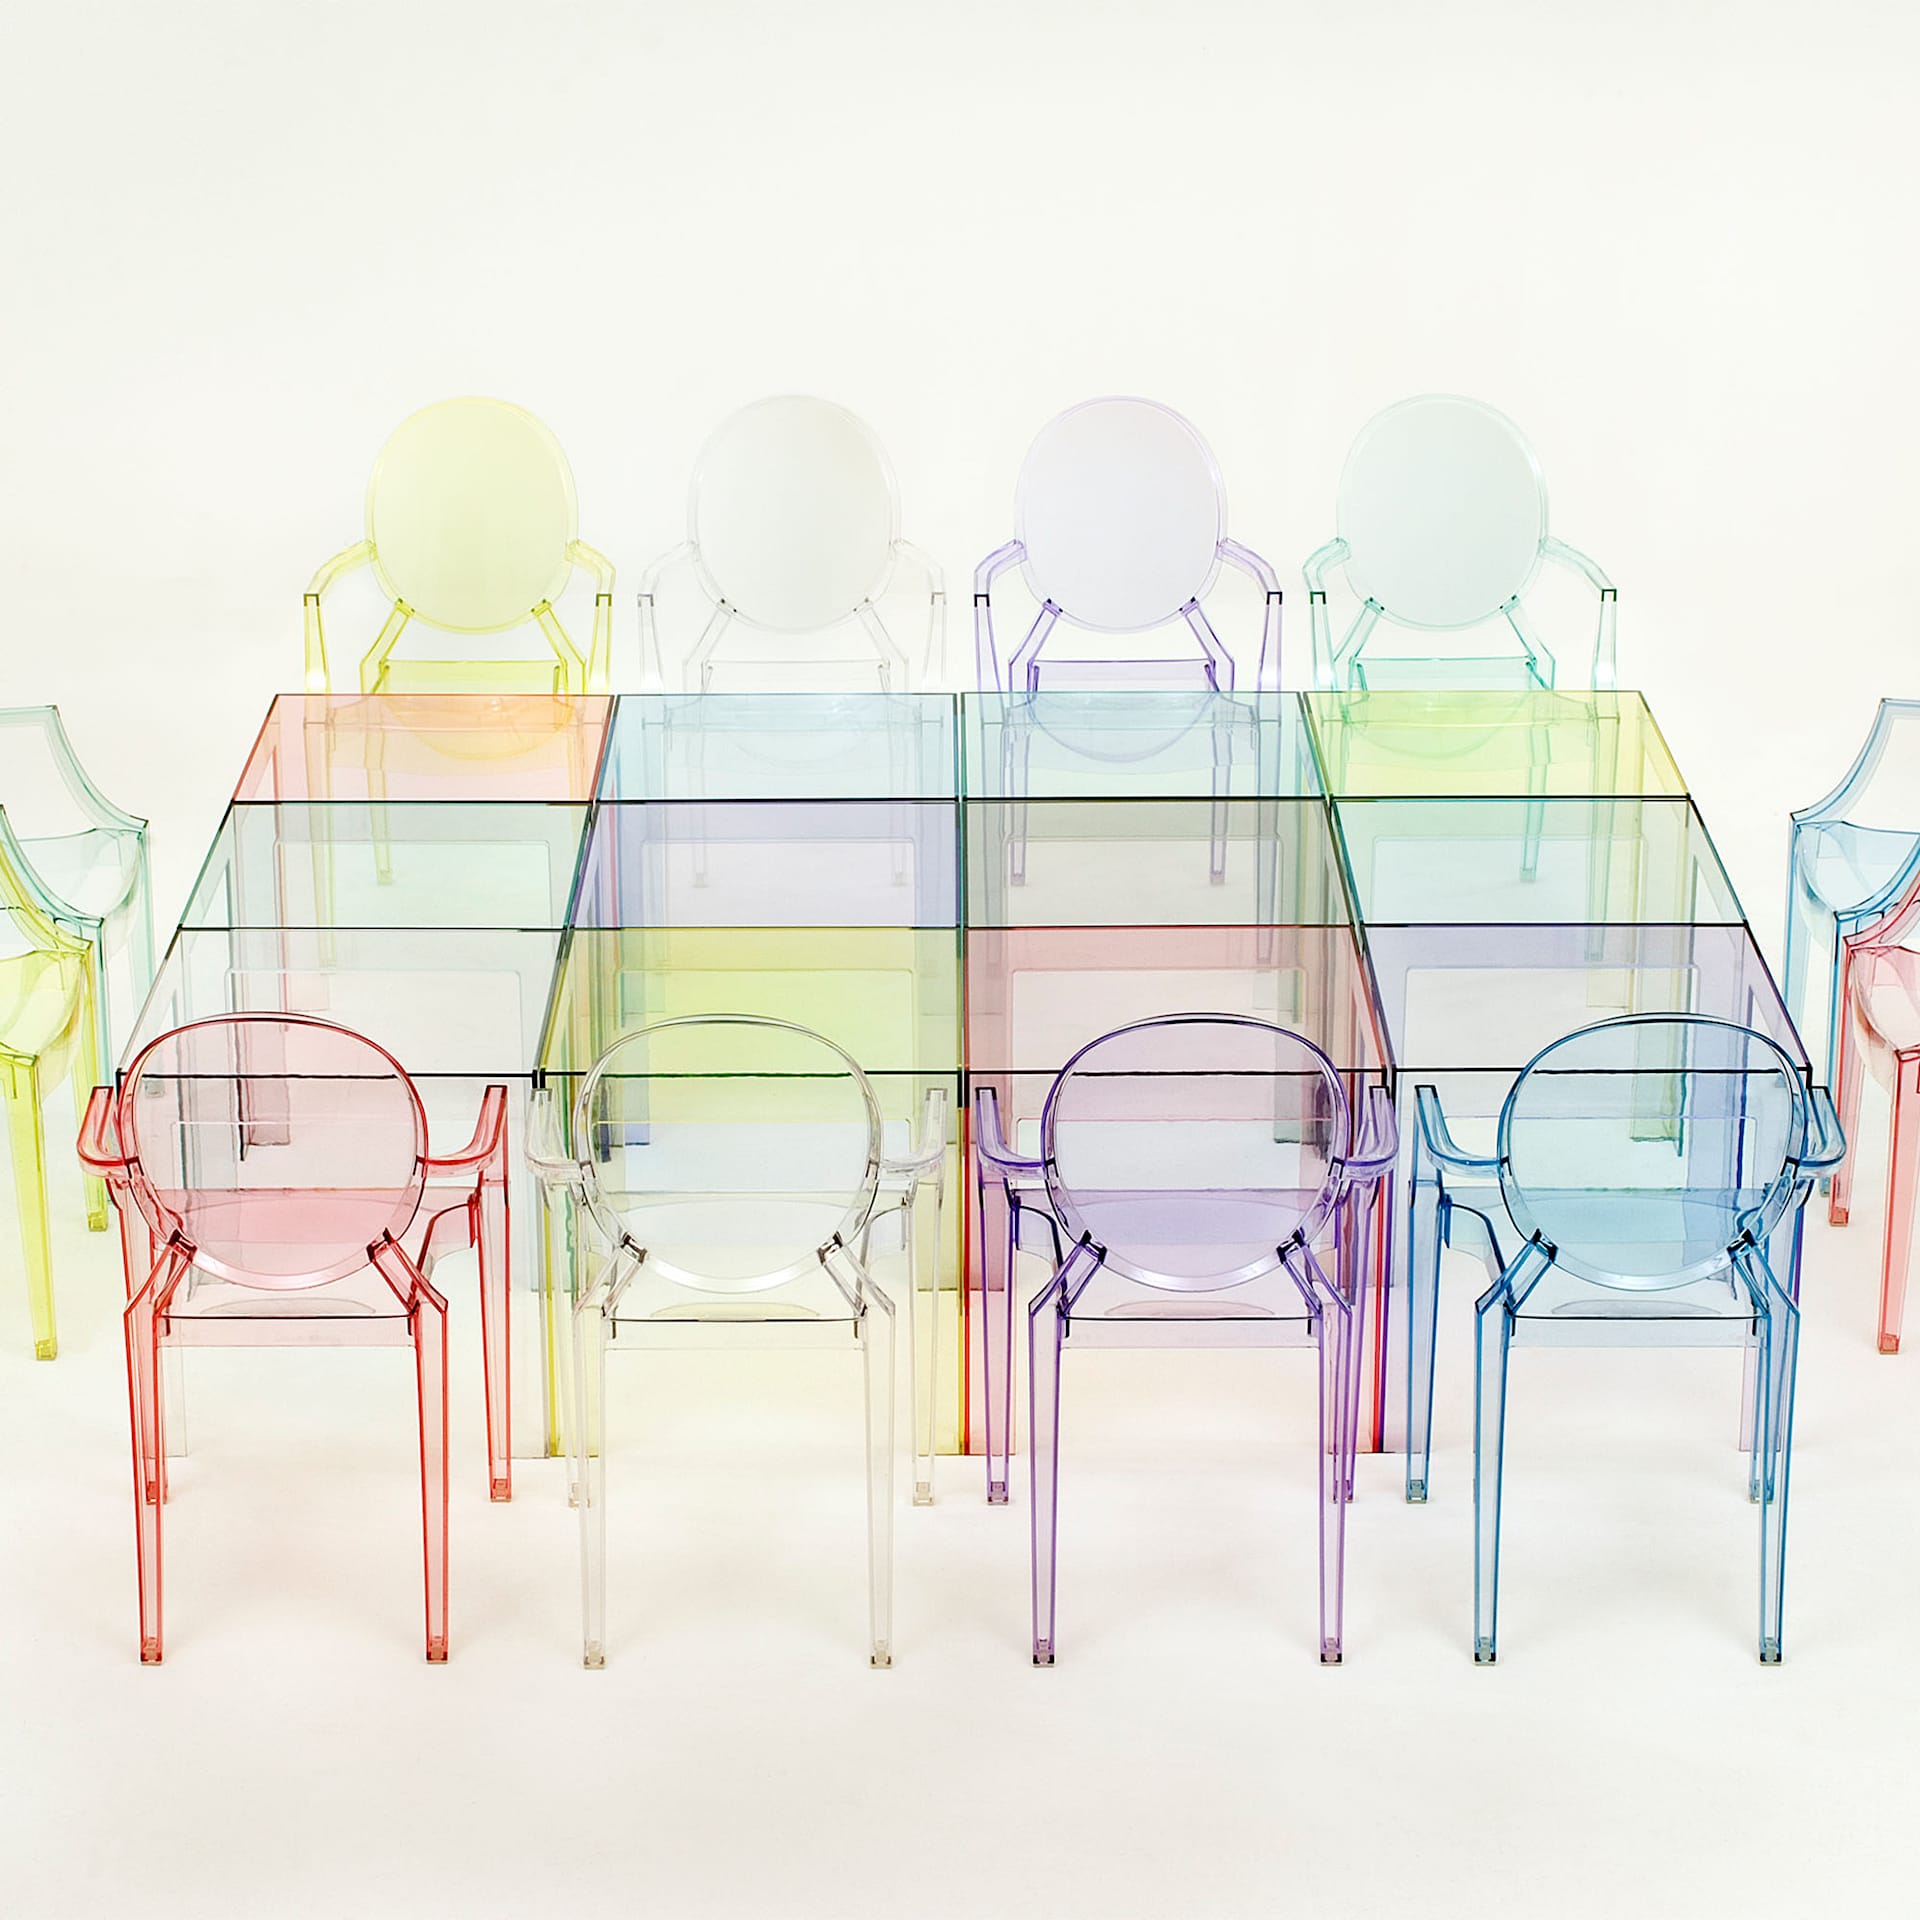 Lou Lou Ghost Chair - Barnstol - Kartell - Philippe Starck - NO GA